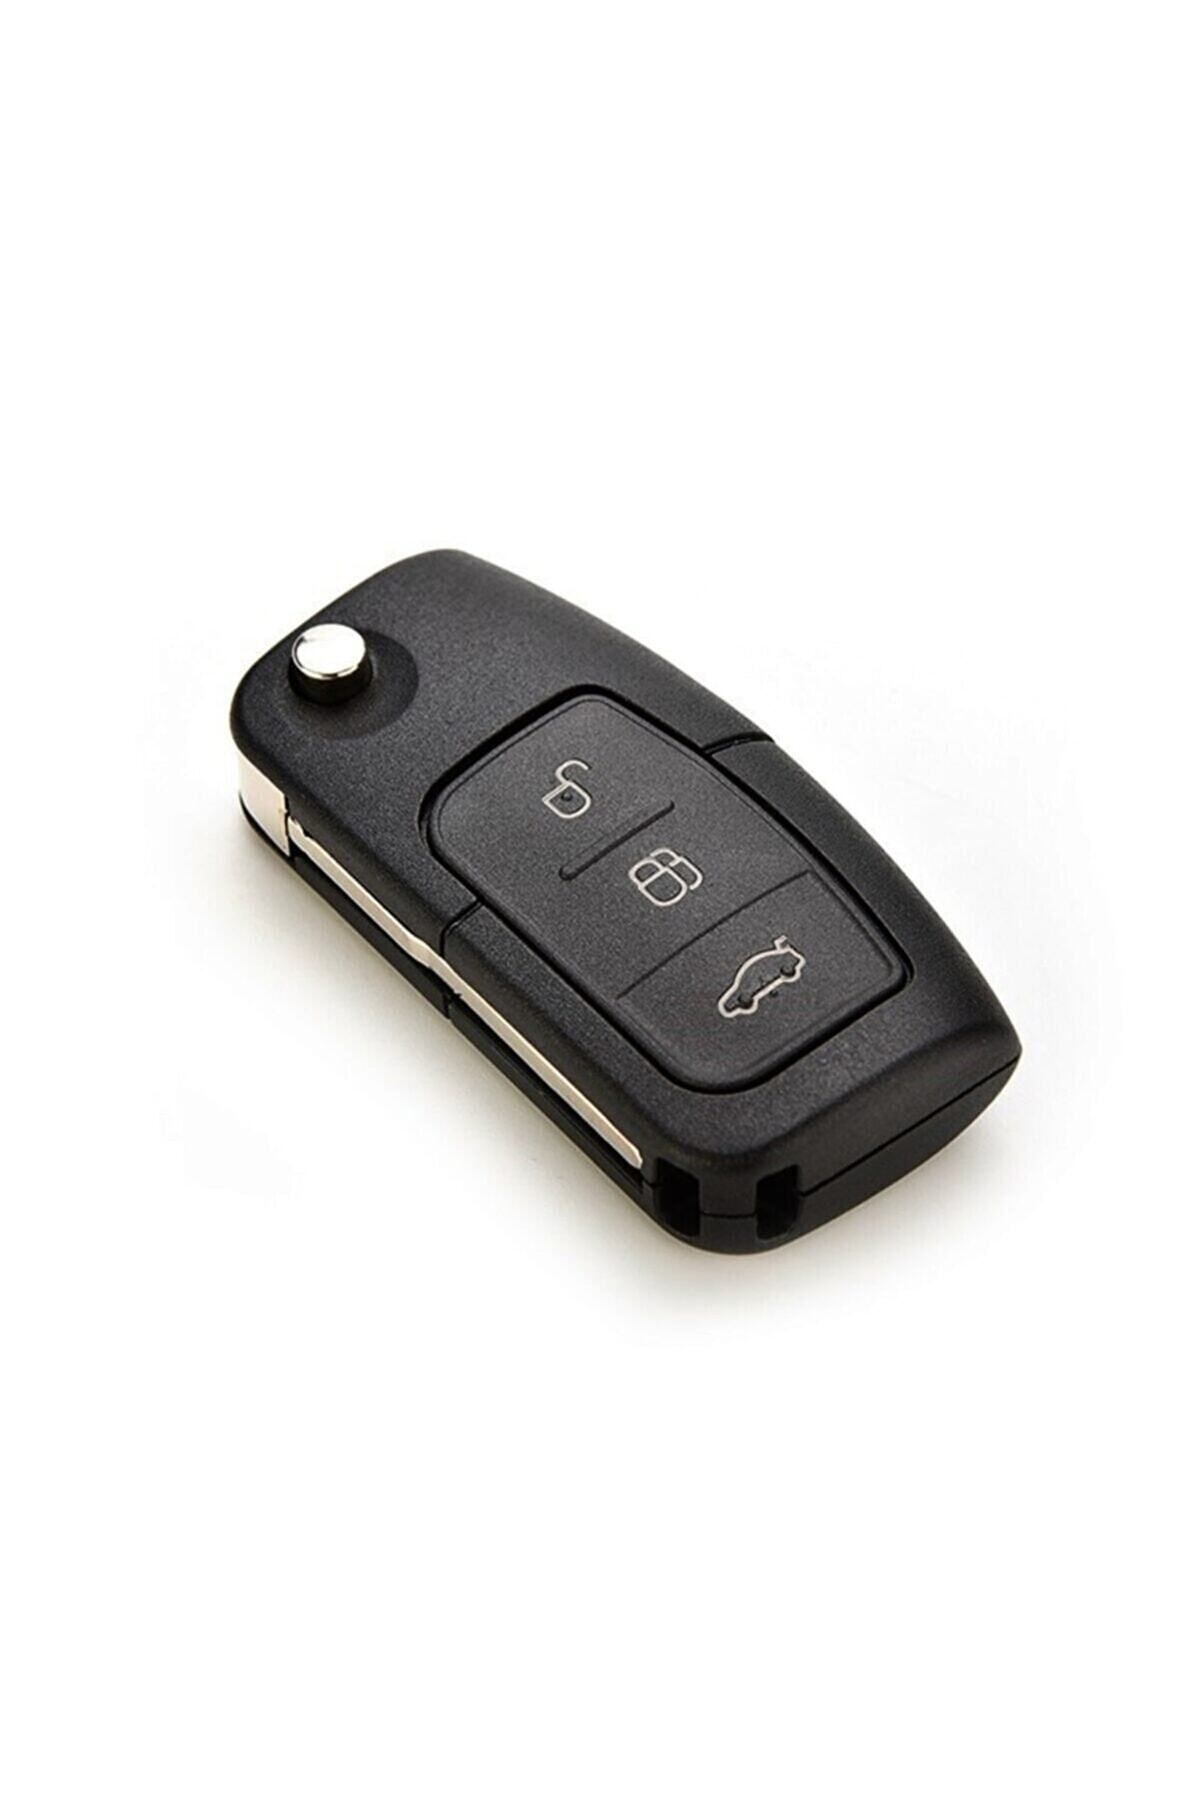 EBG İSTANBUL Ford Focus 2 Anahtar,mondeo Anahtar,fiesta Anahtar,c Max Anahtar Kabı (1.kalite)